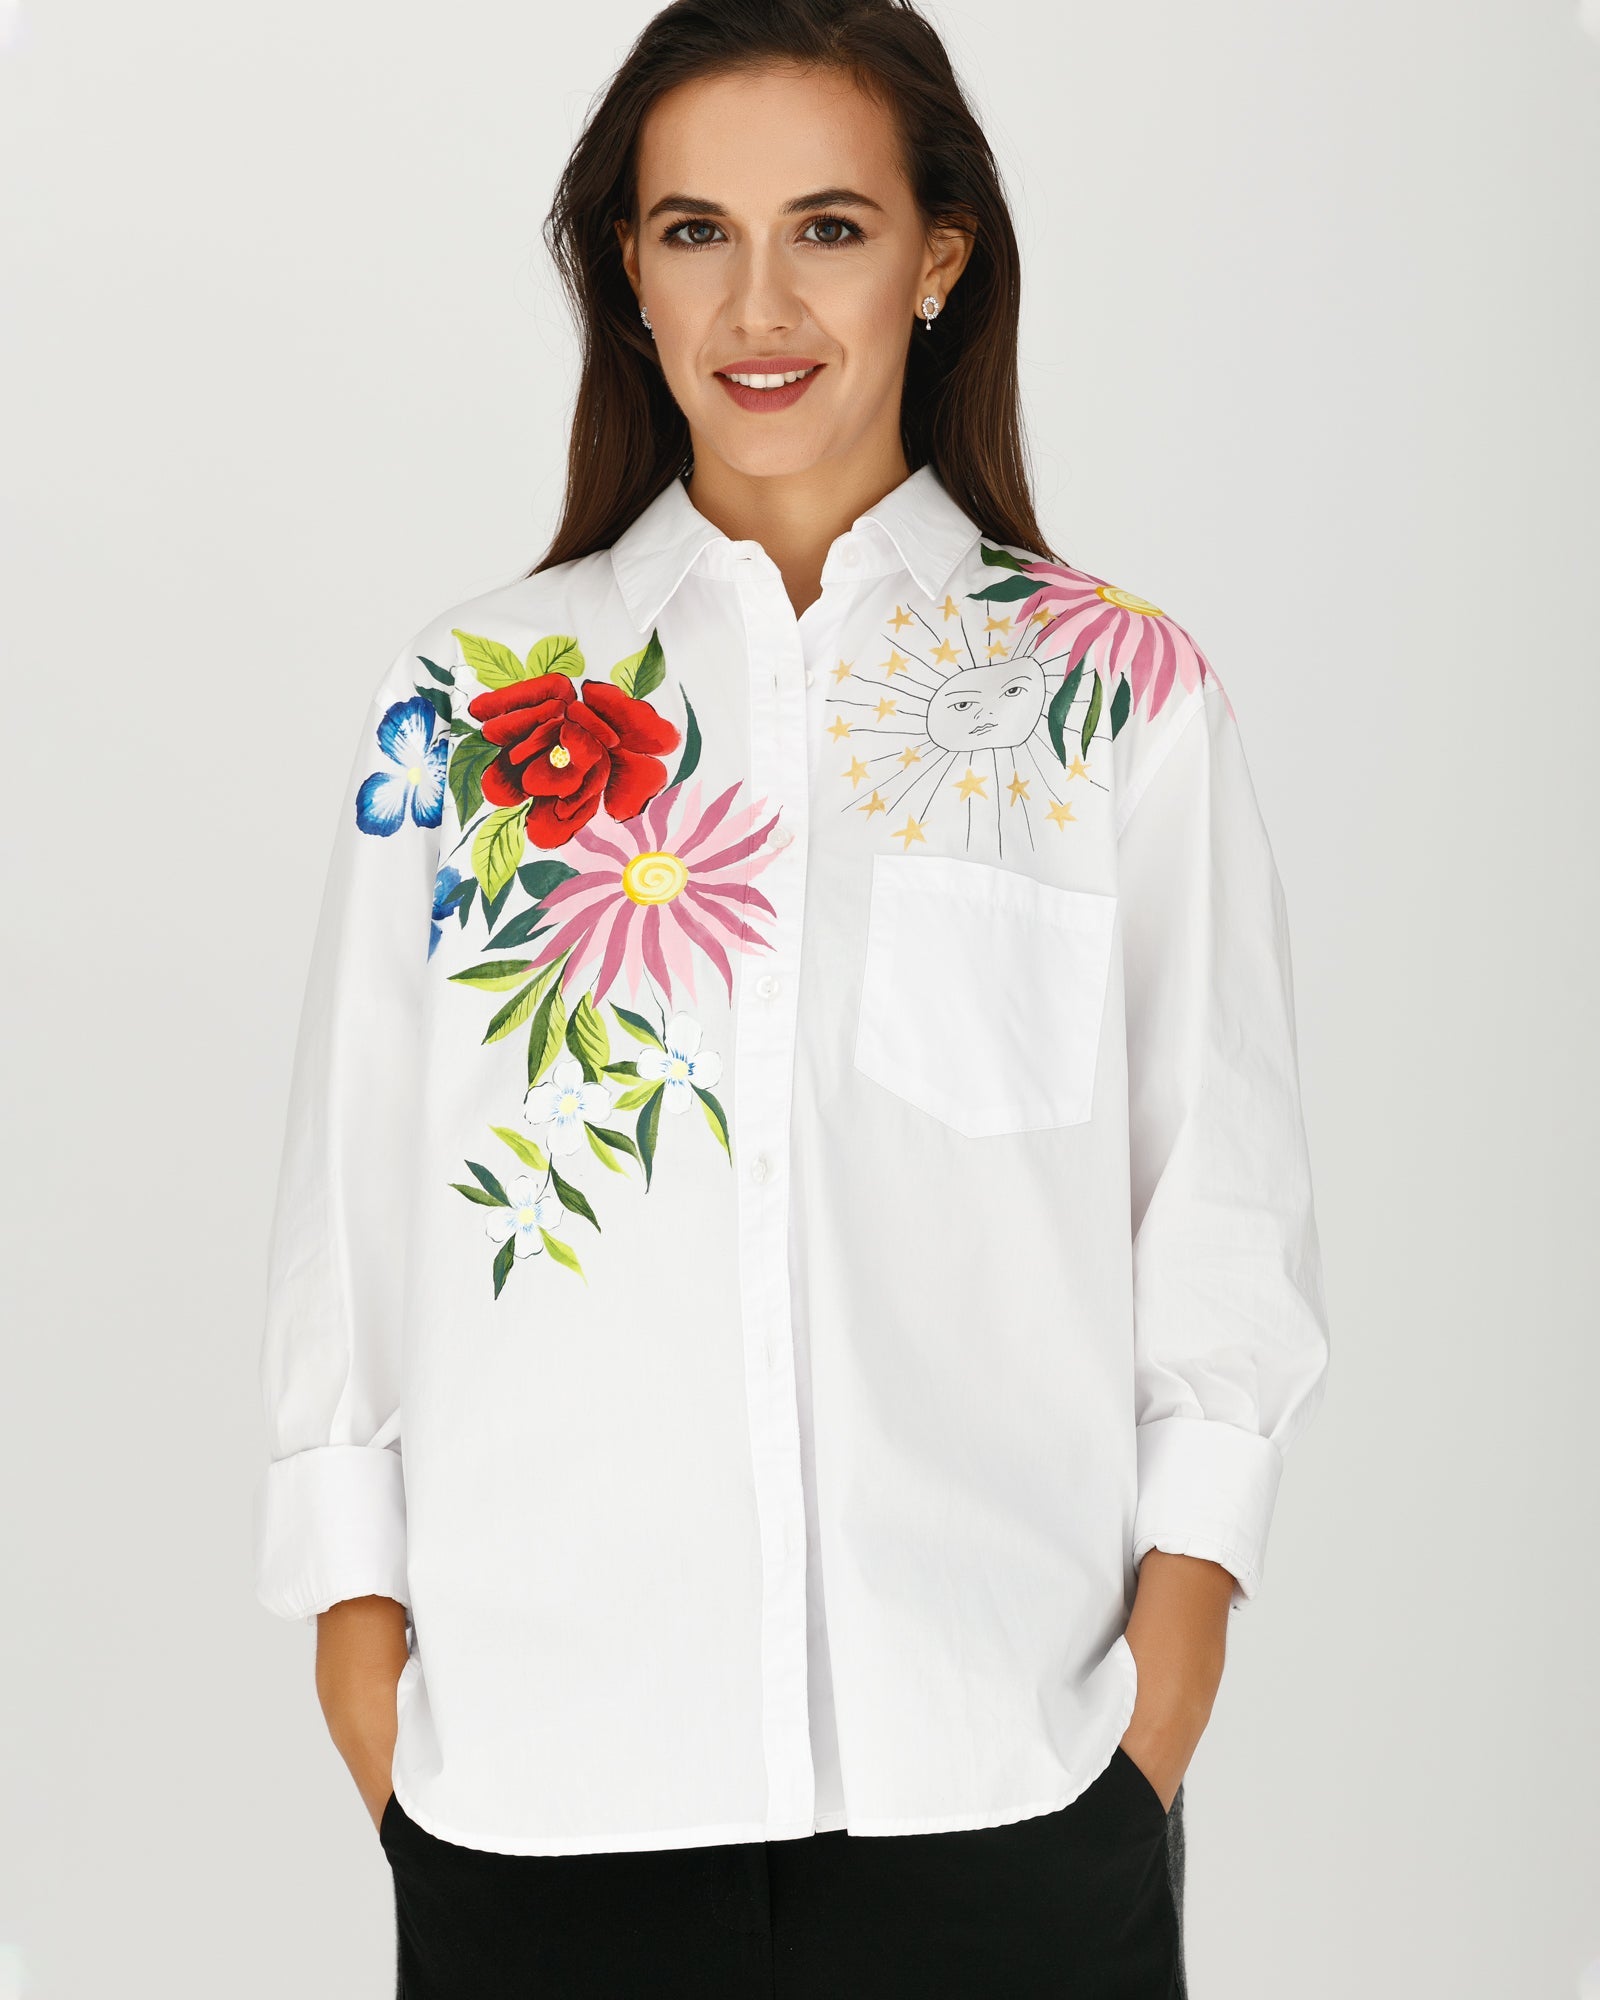 Floral motif shirt "Flowers & The Sun"